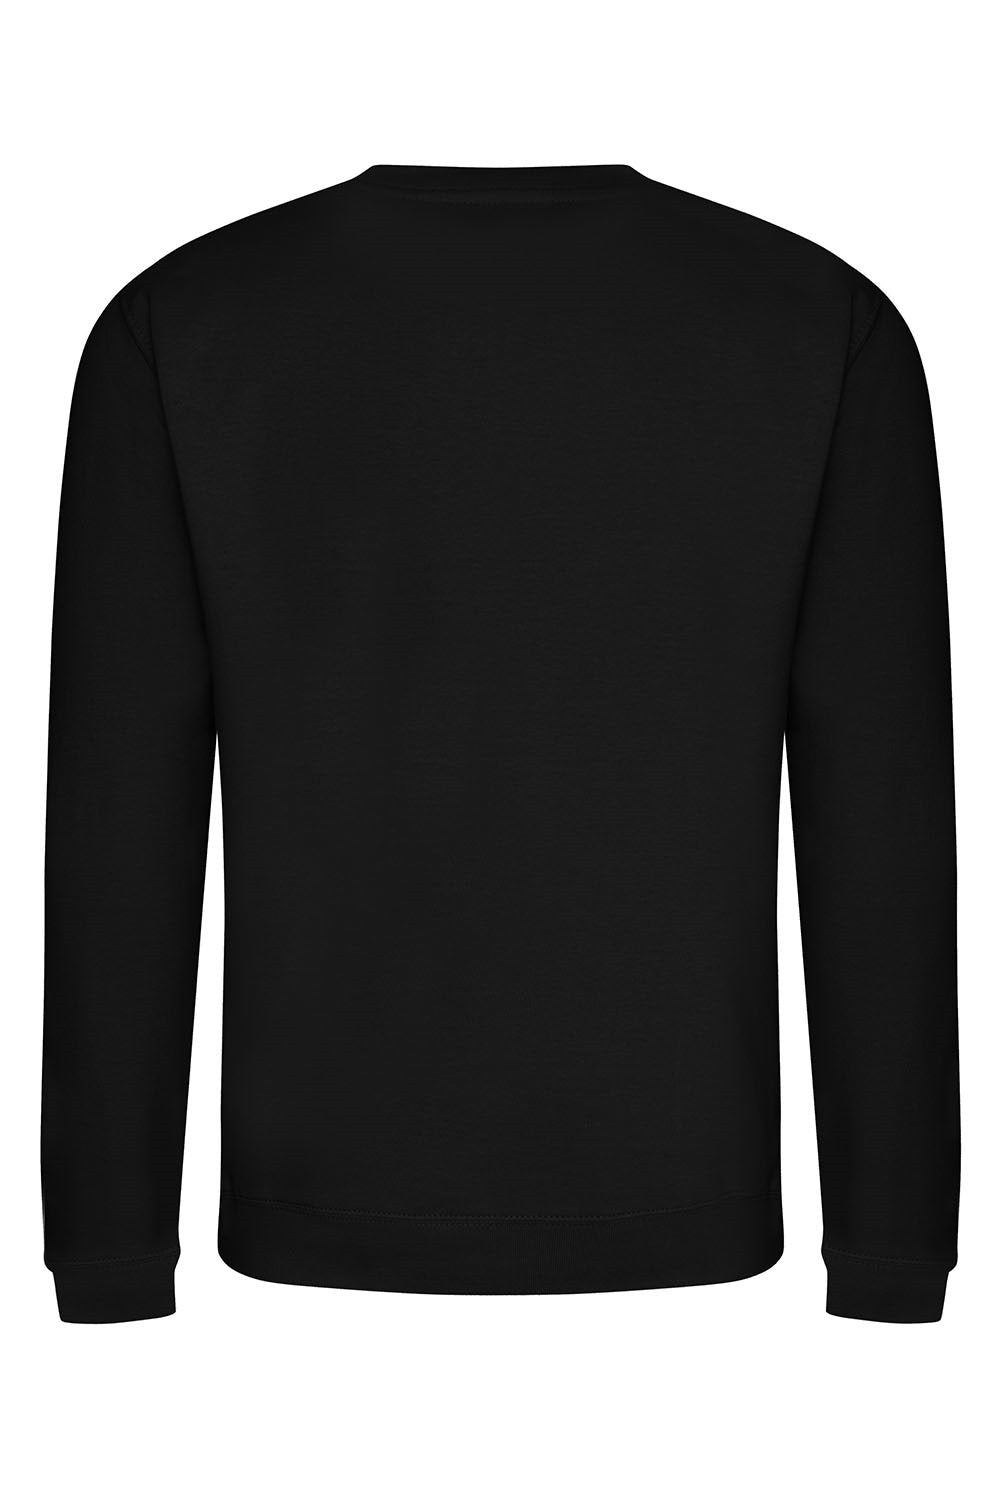 Plain Sweatshirt In Deep Black (Single)